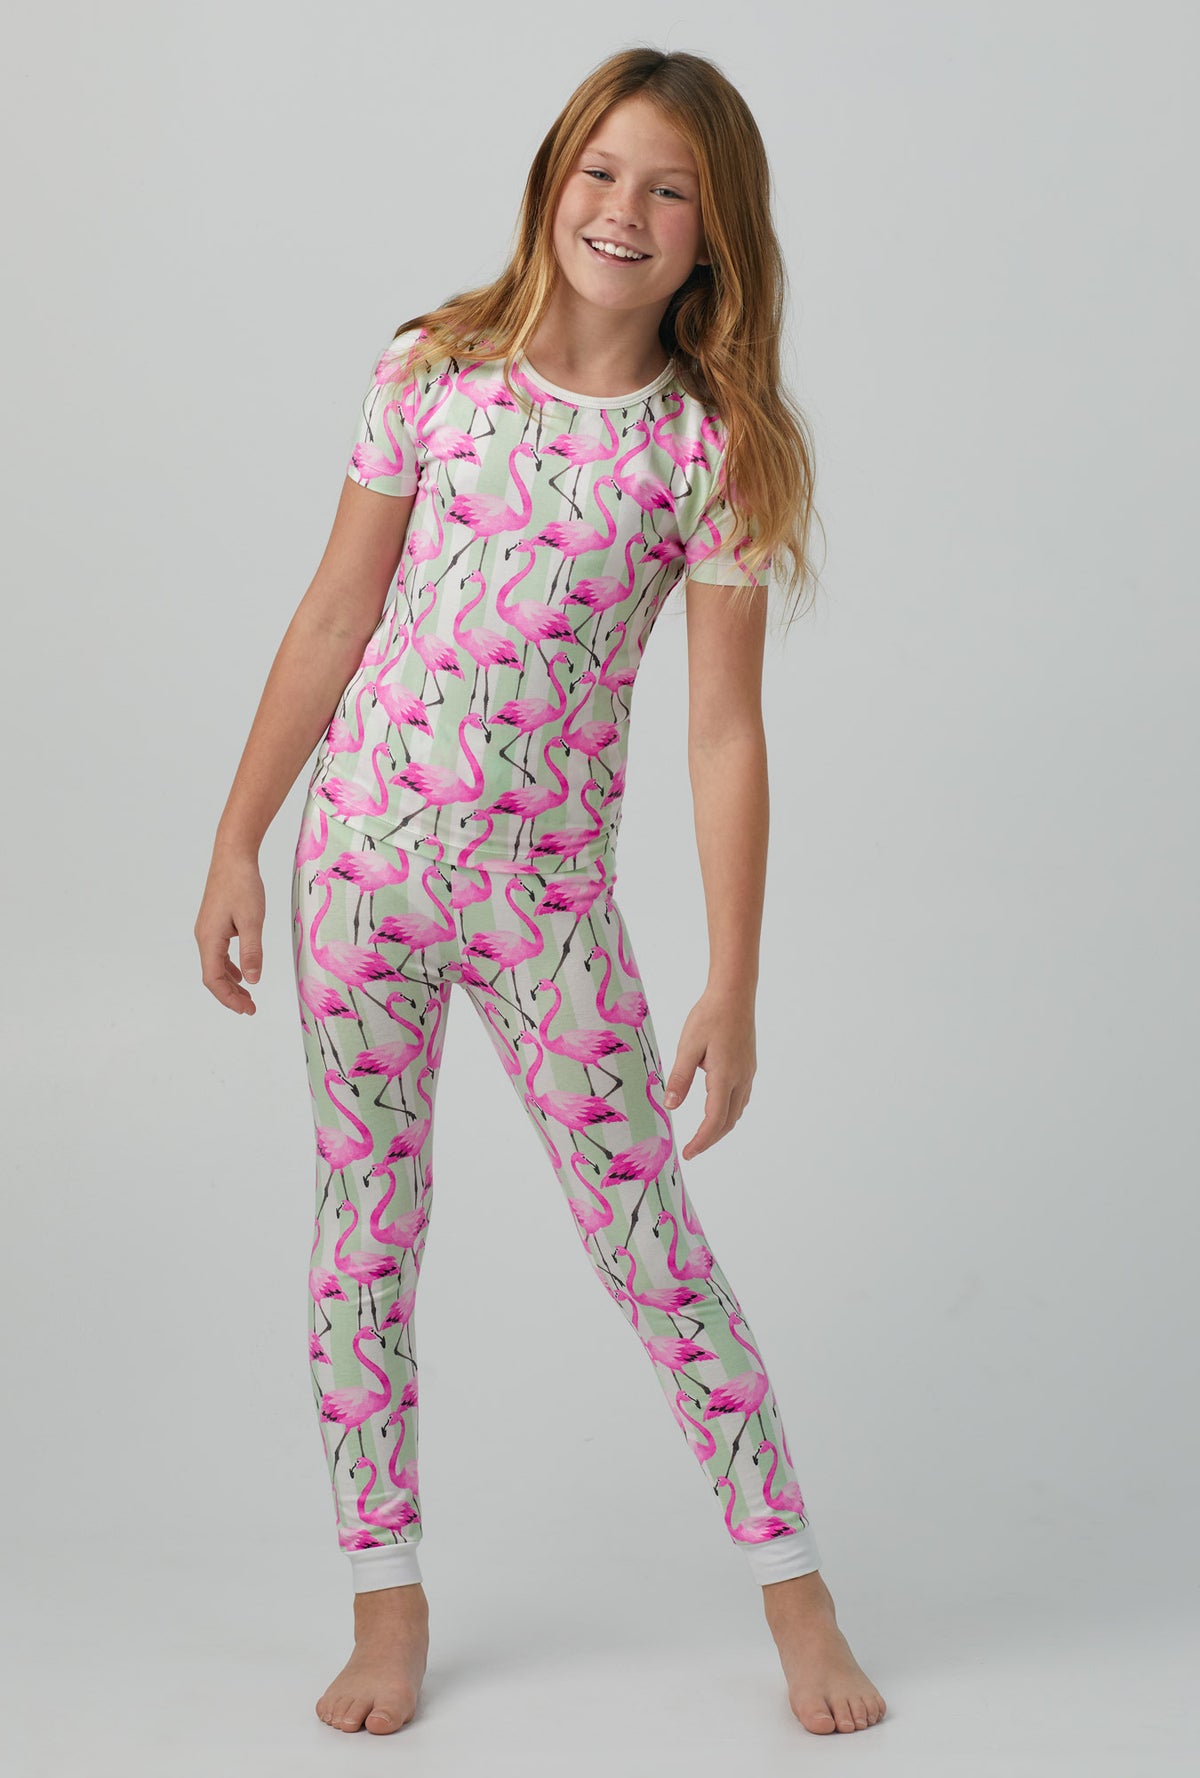 A girl wearing Short Sleeve Stretch Jersey Kids PJ Set with  Flamingo Bay print